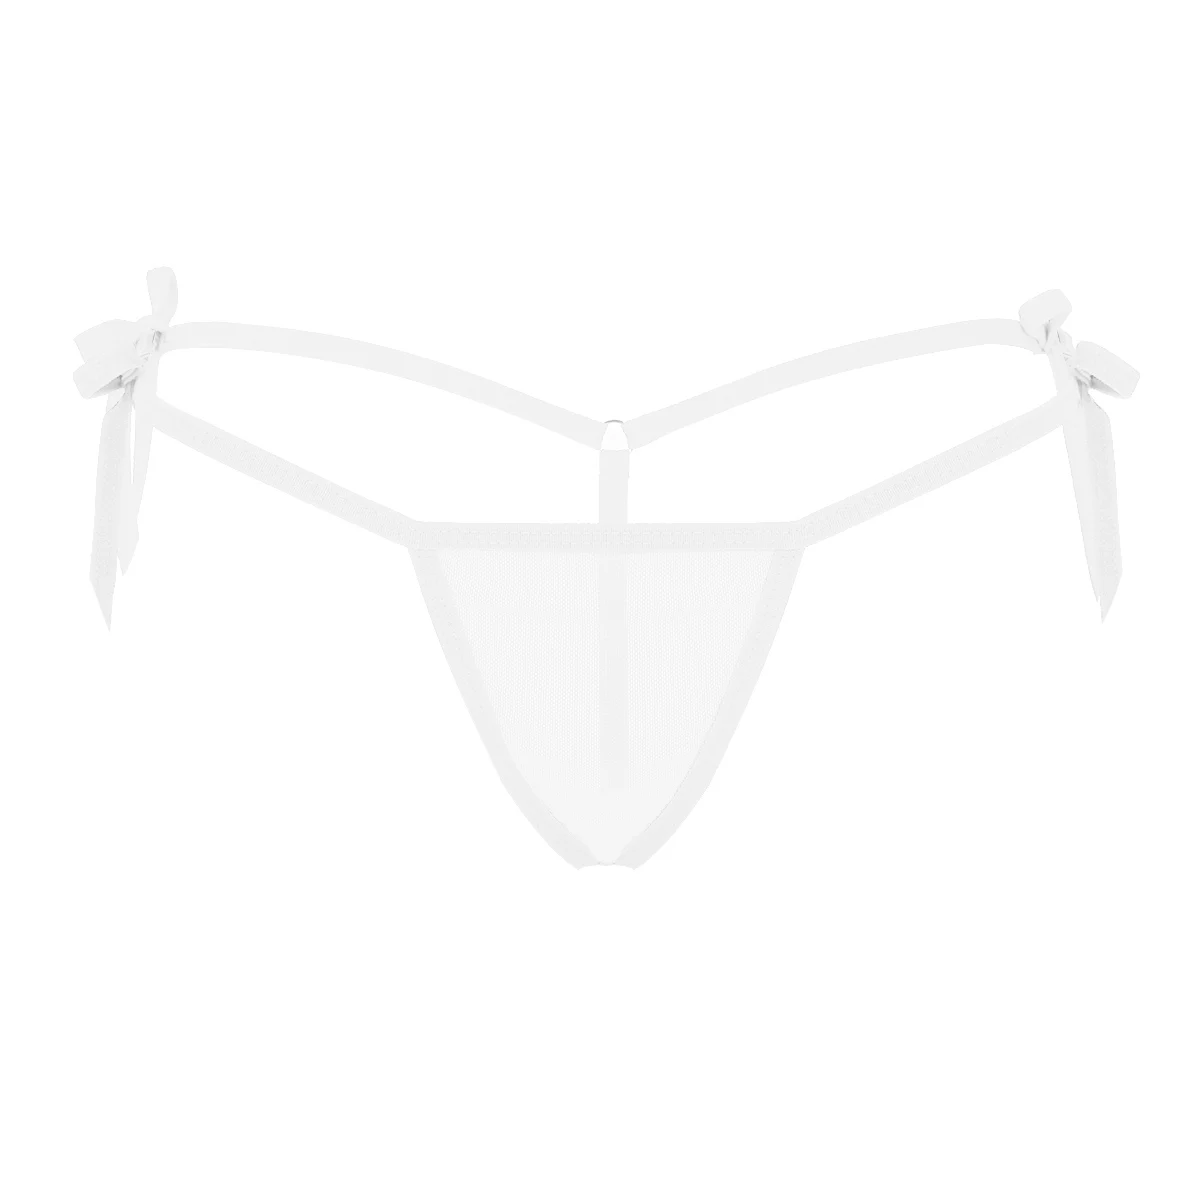 Women's Swimsuit Mesh Lingerie Underwear See Through Sheer Low Rise Tie-Side T-Back Mini G-String Thong Bikini Briefs Underwear - Color: White